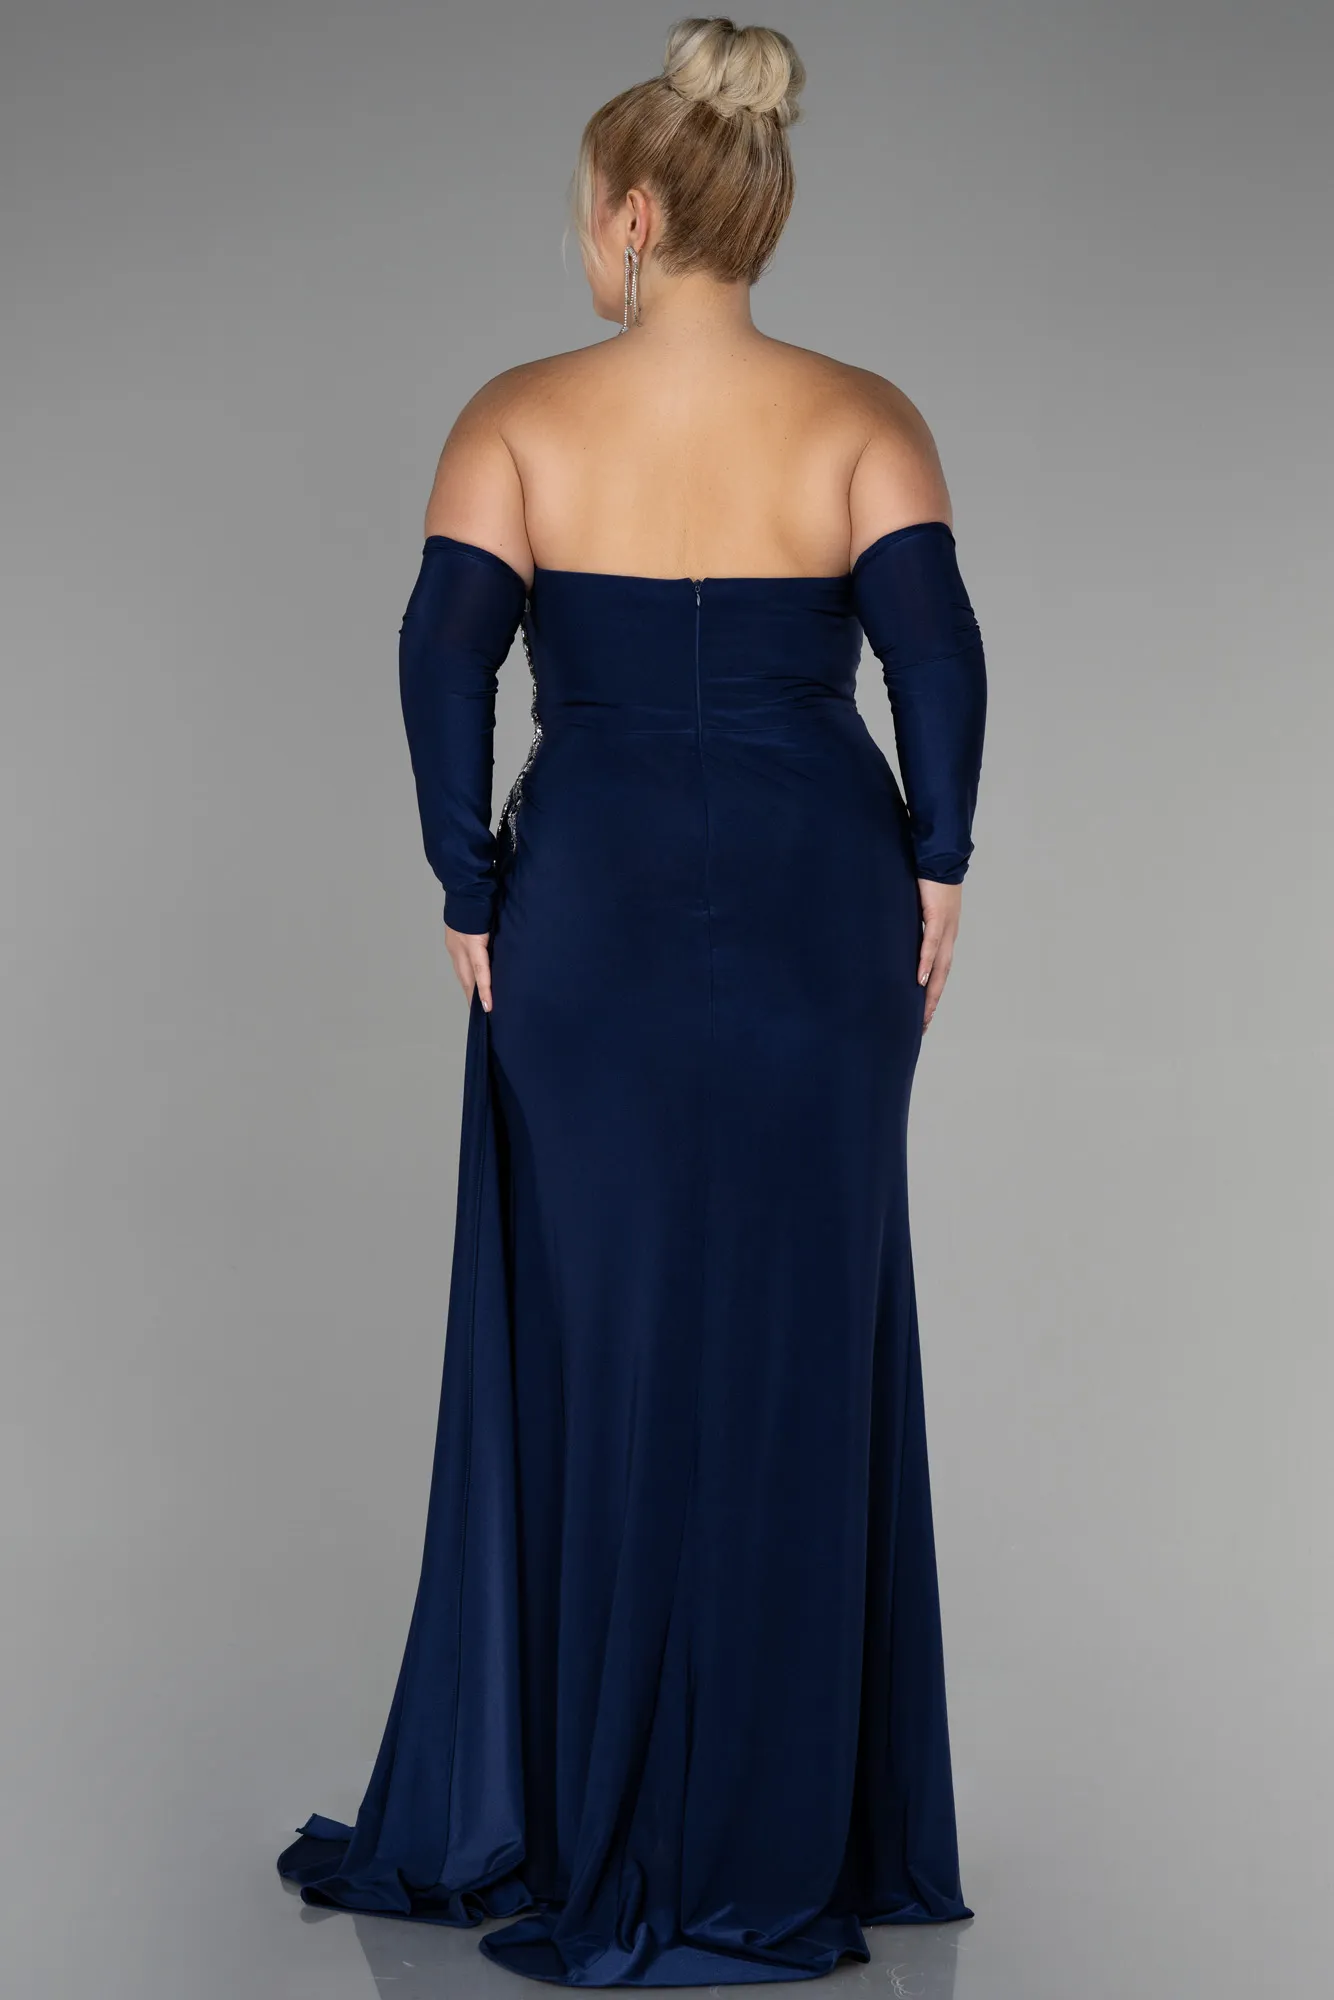 Navy Blue-Long Plus Size Evening Dress ABU3352